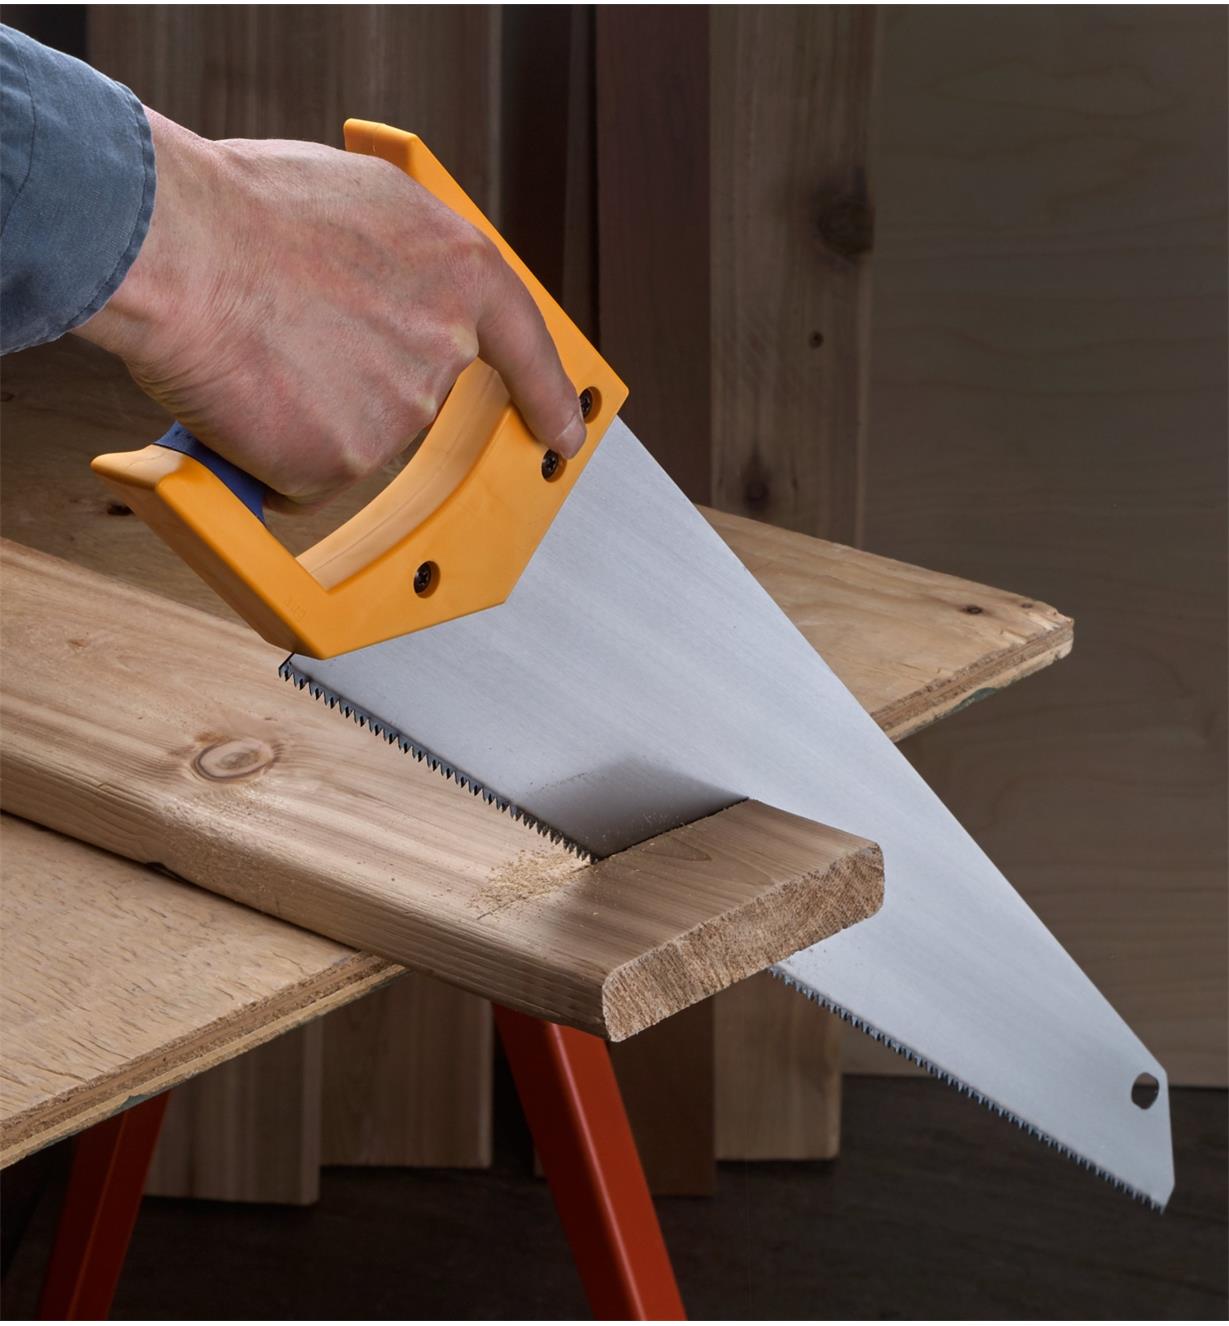 Using a Professional Handsaw to cross-cut a deck board